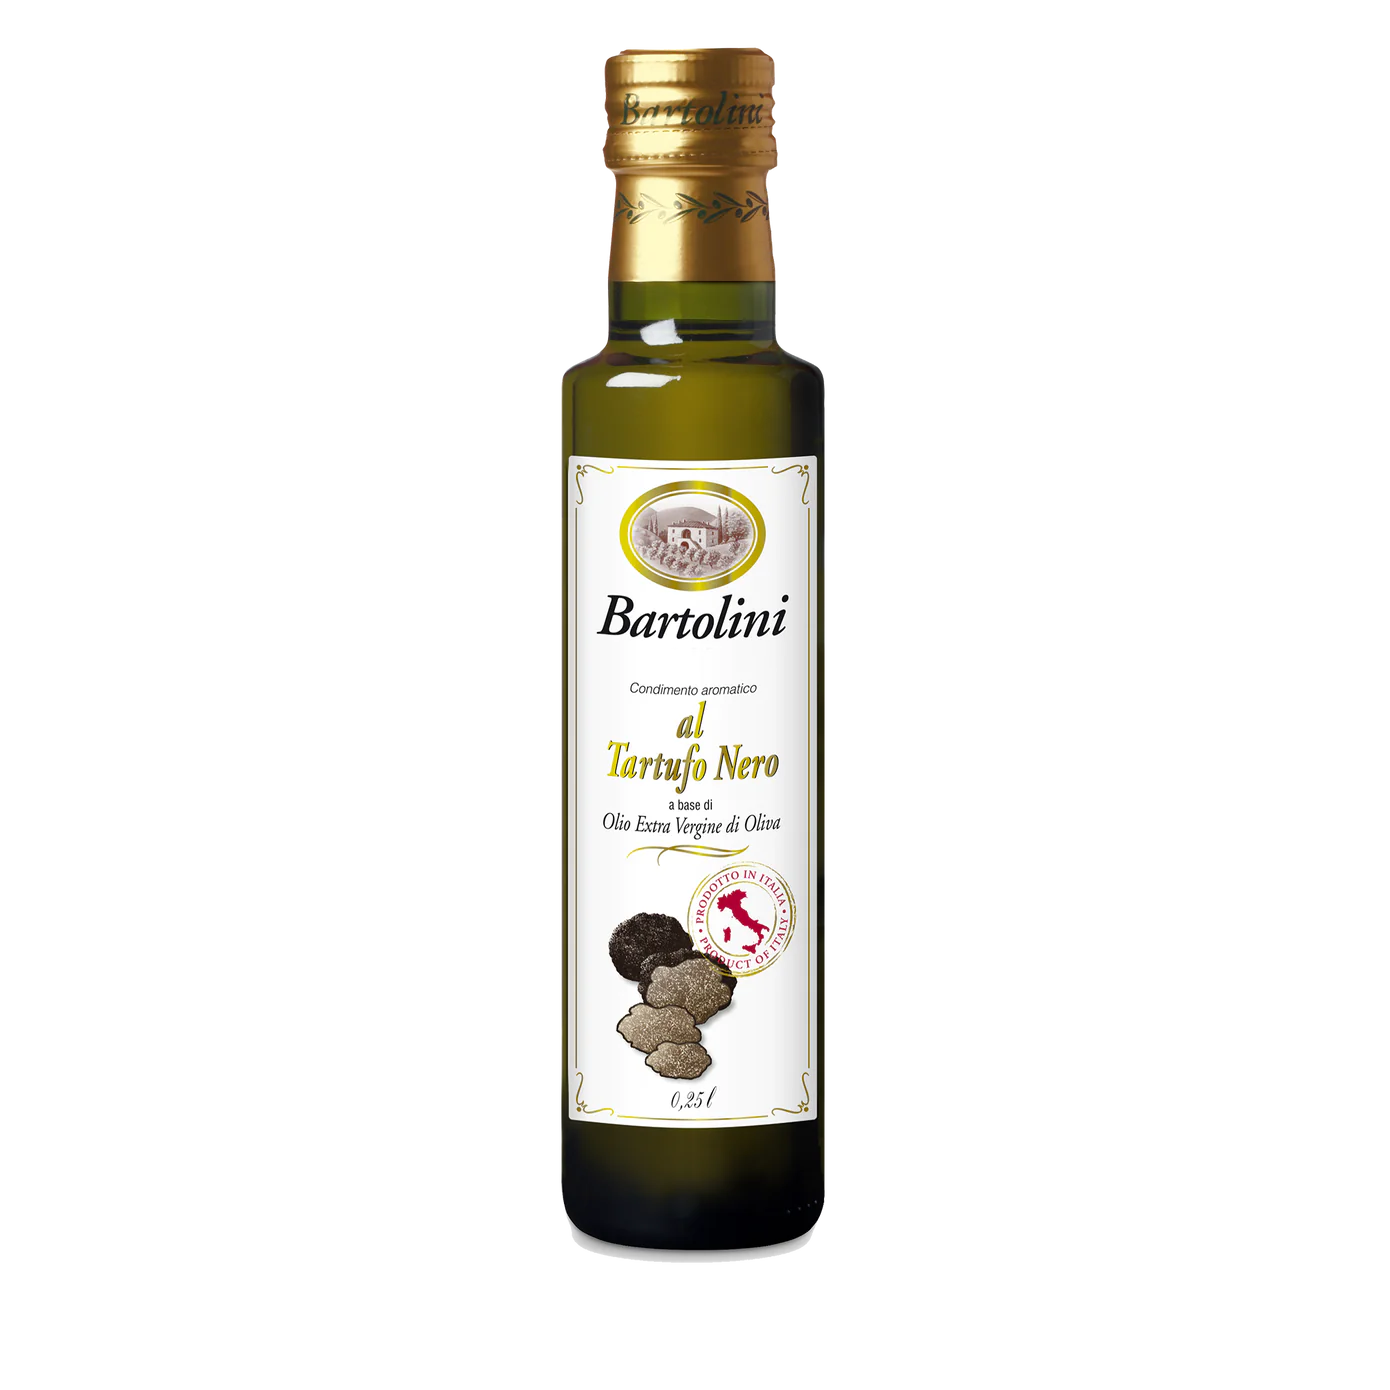 Bartolini Emilio Black Truffle Oil 8.4 fl oz